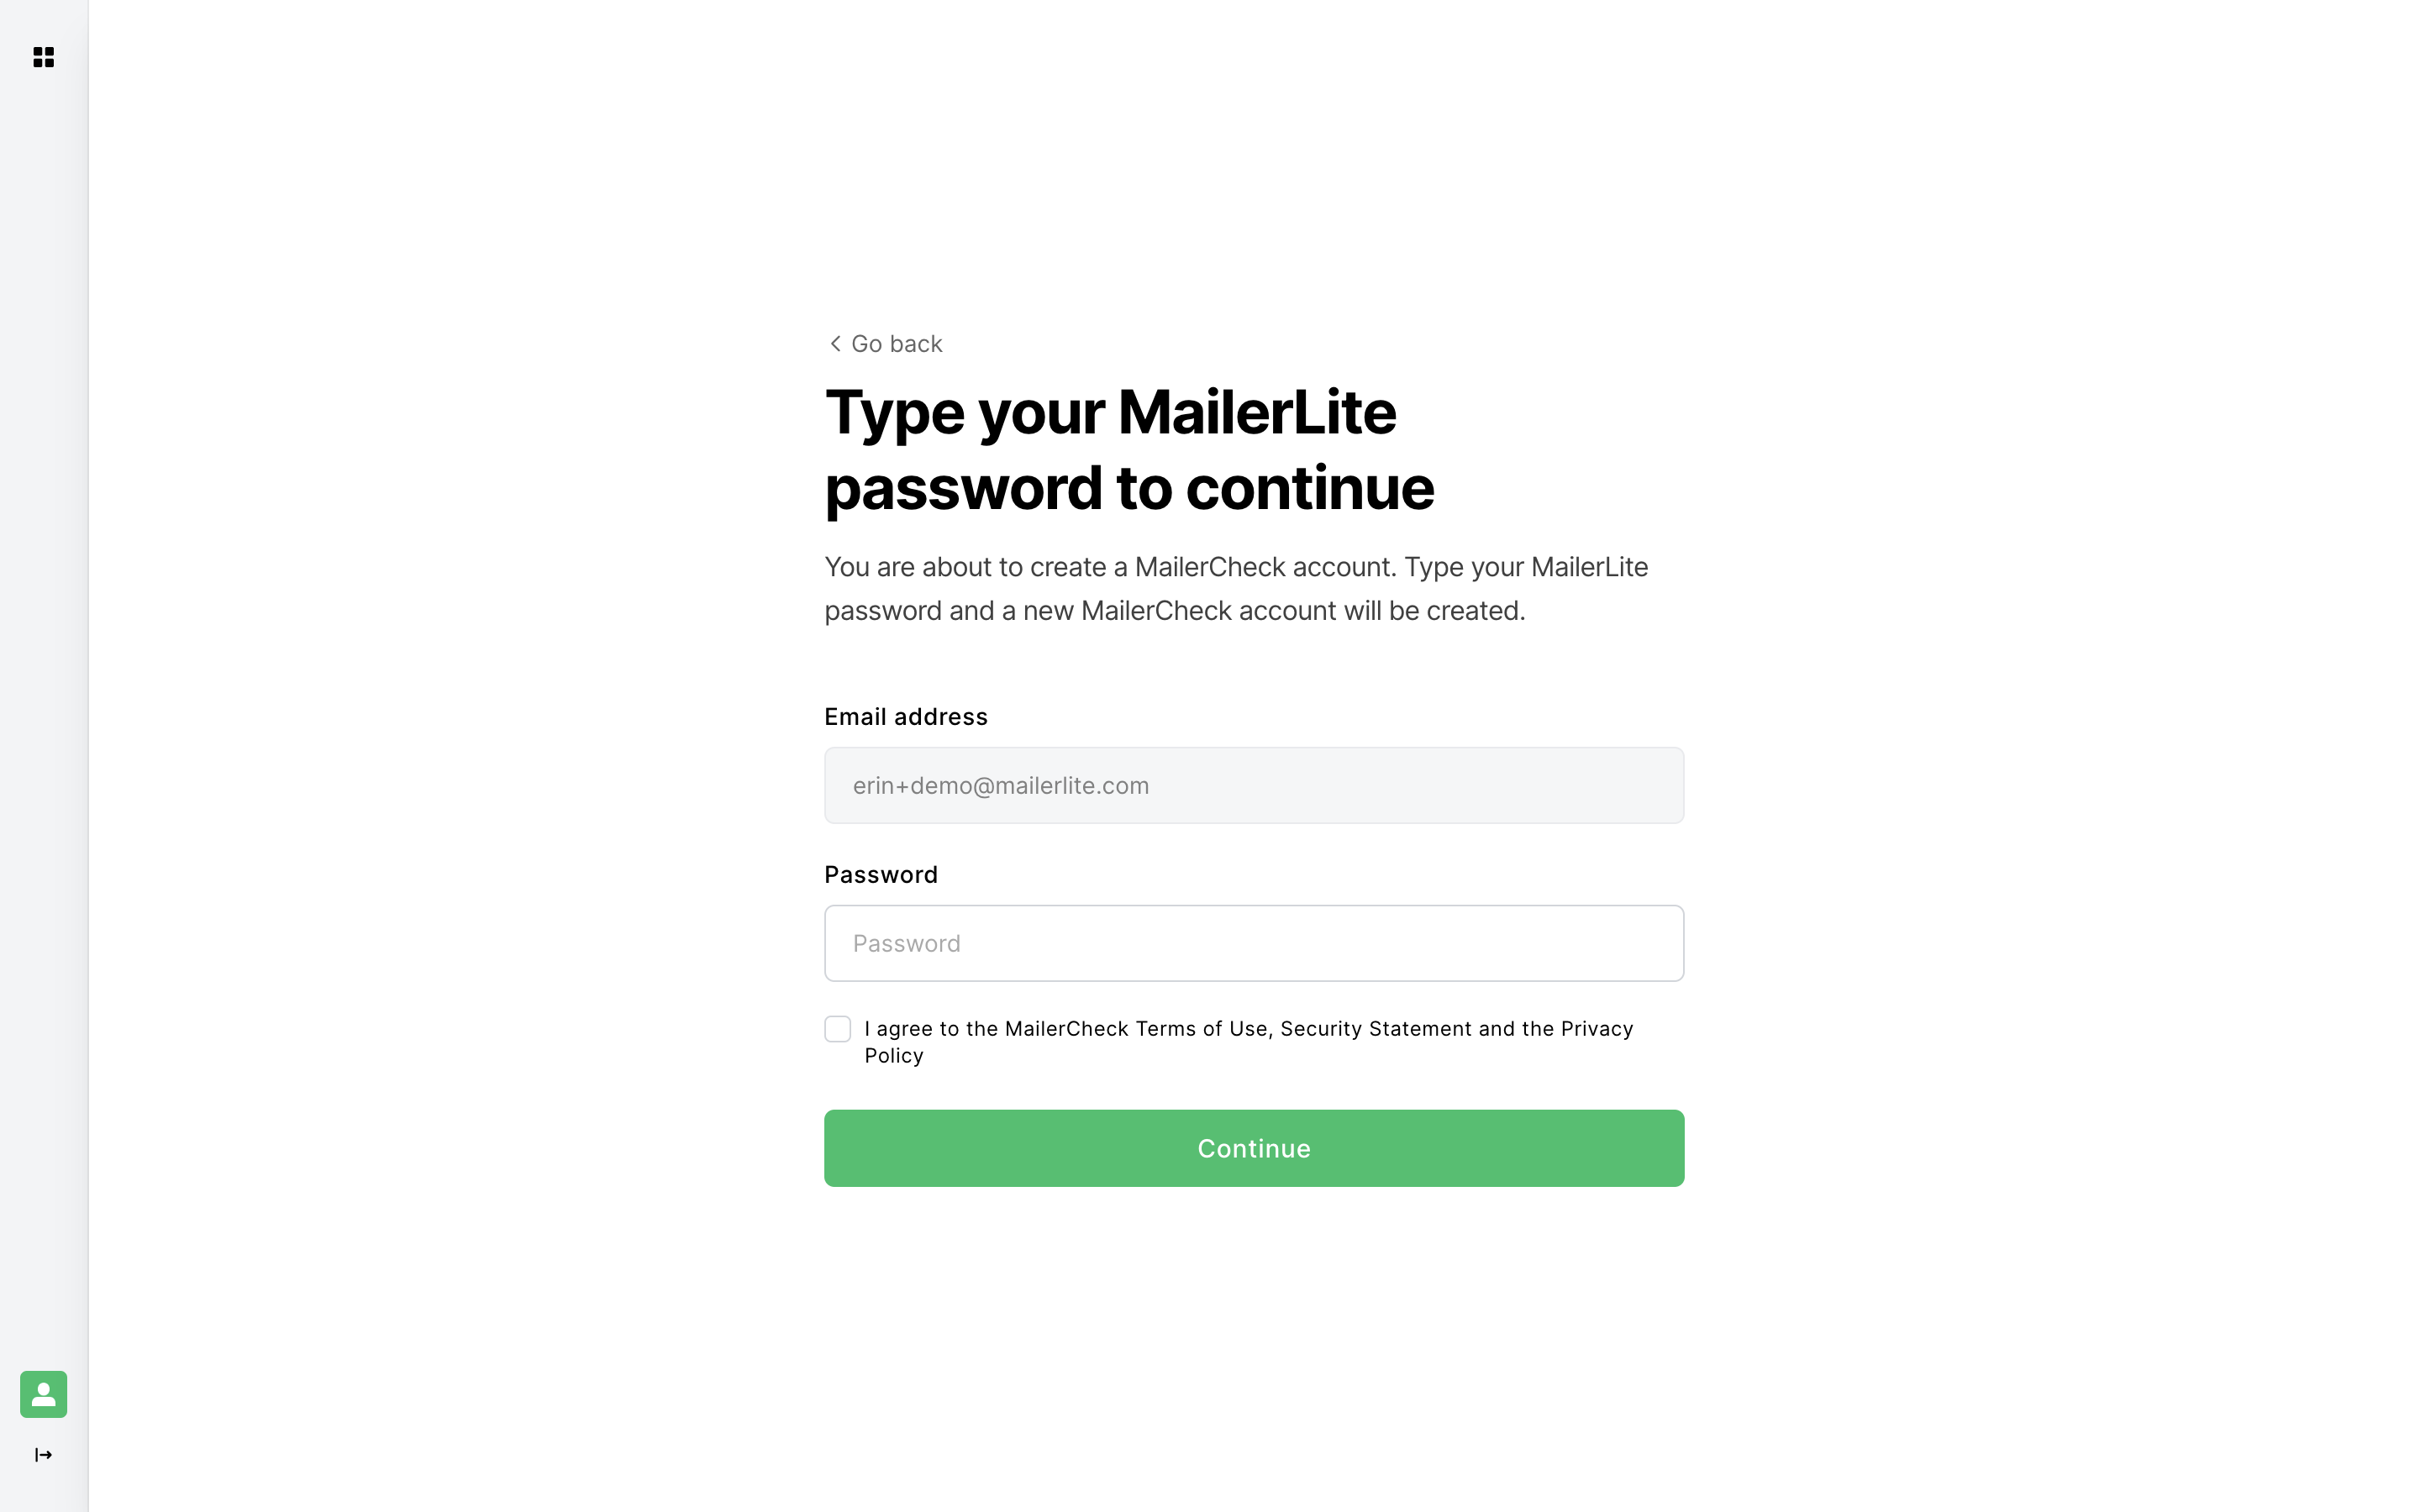 Create a new MailerCheck account